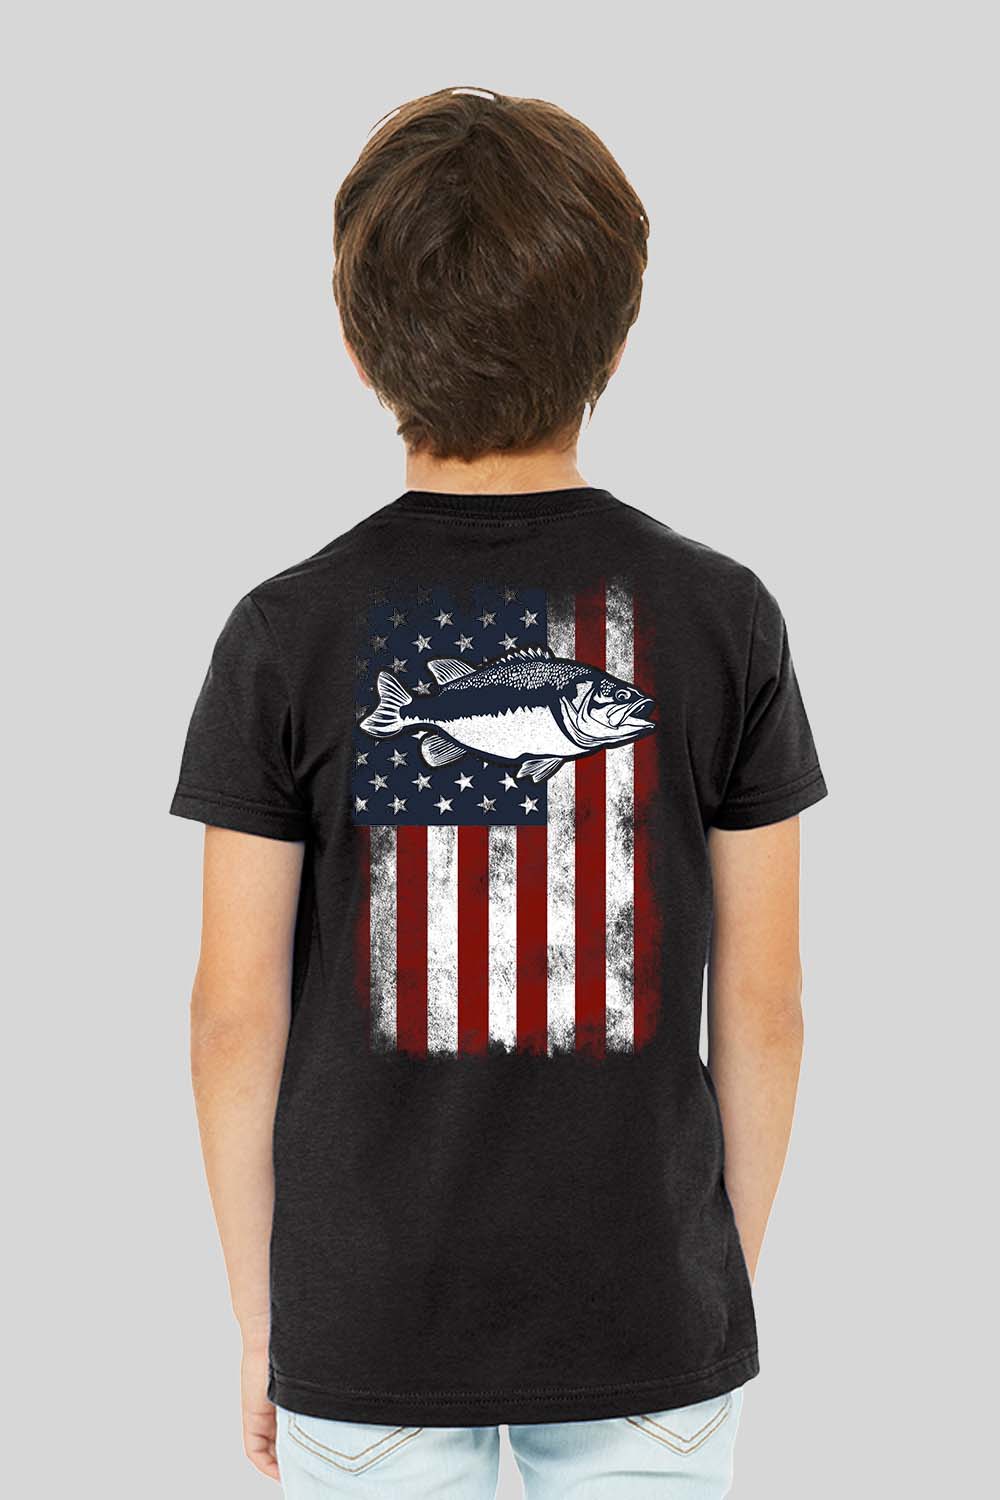 Bass Its In My Blood T-Shirt - Bass Fishing T-Shirts